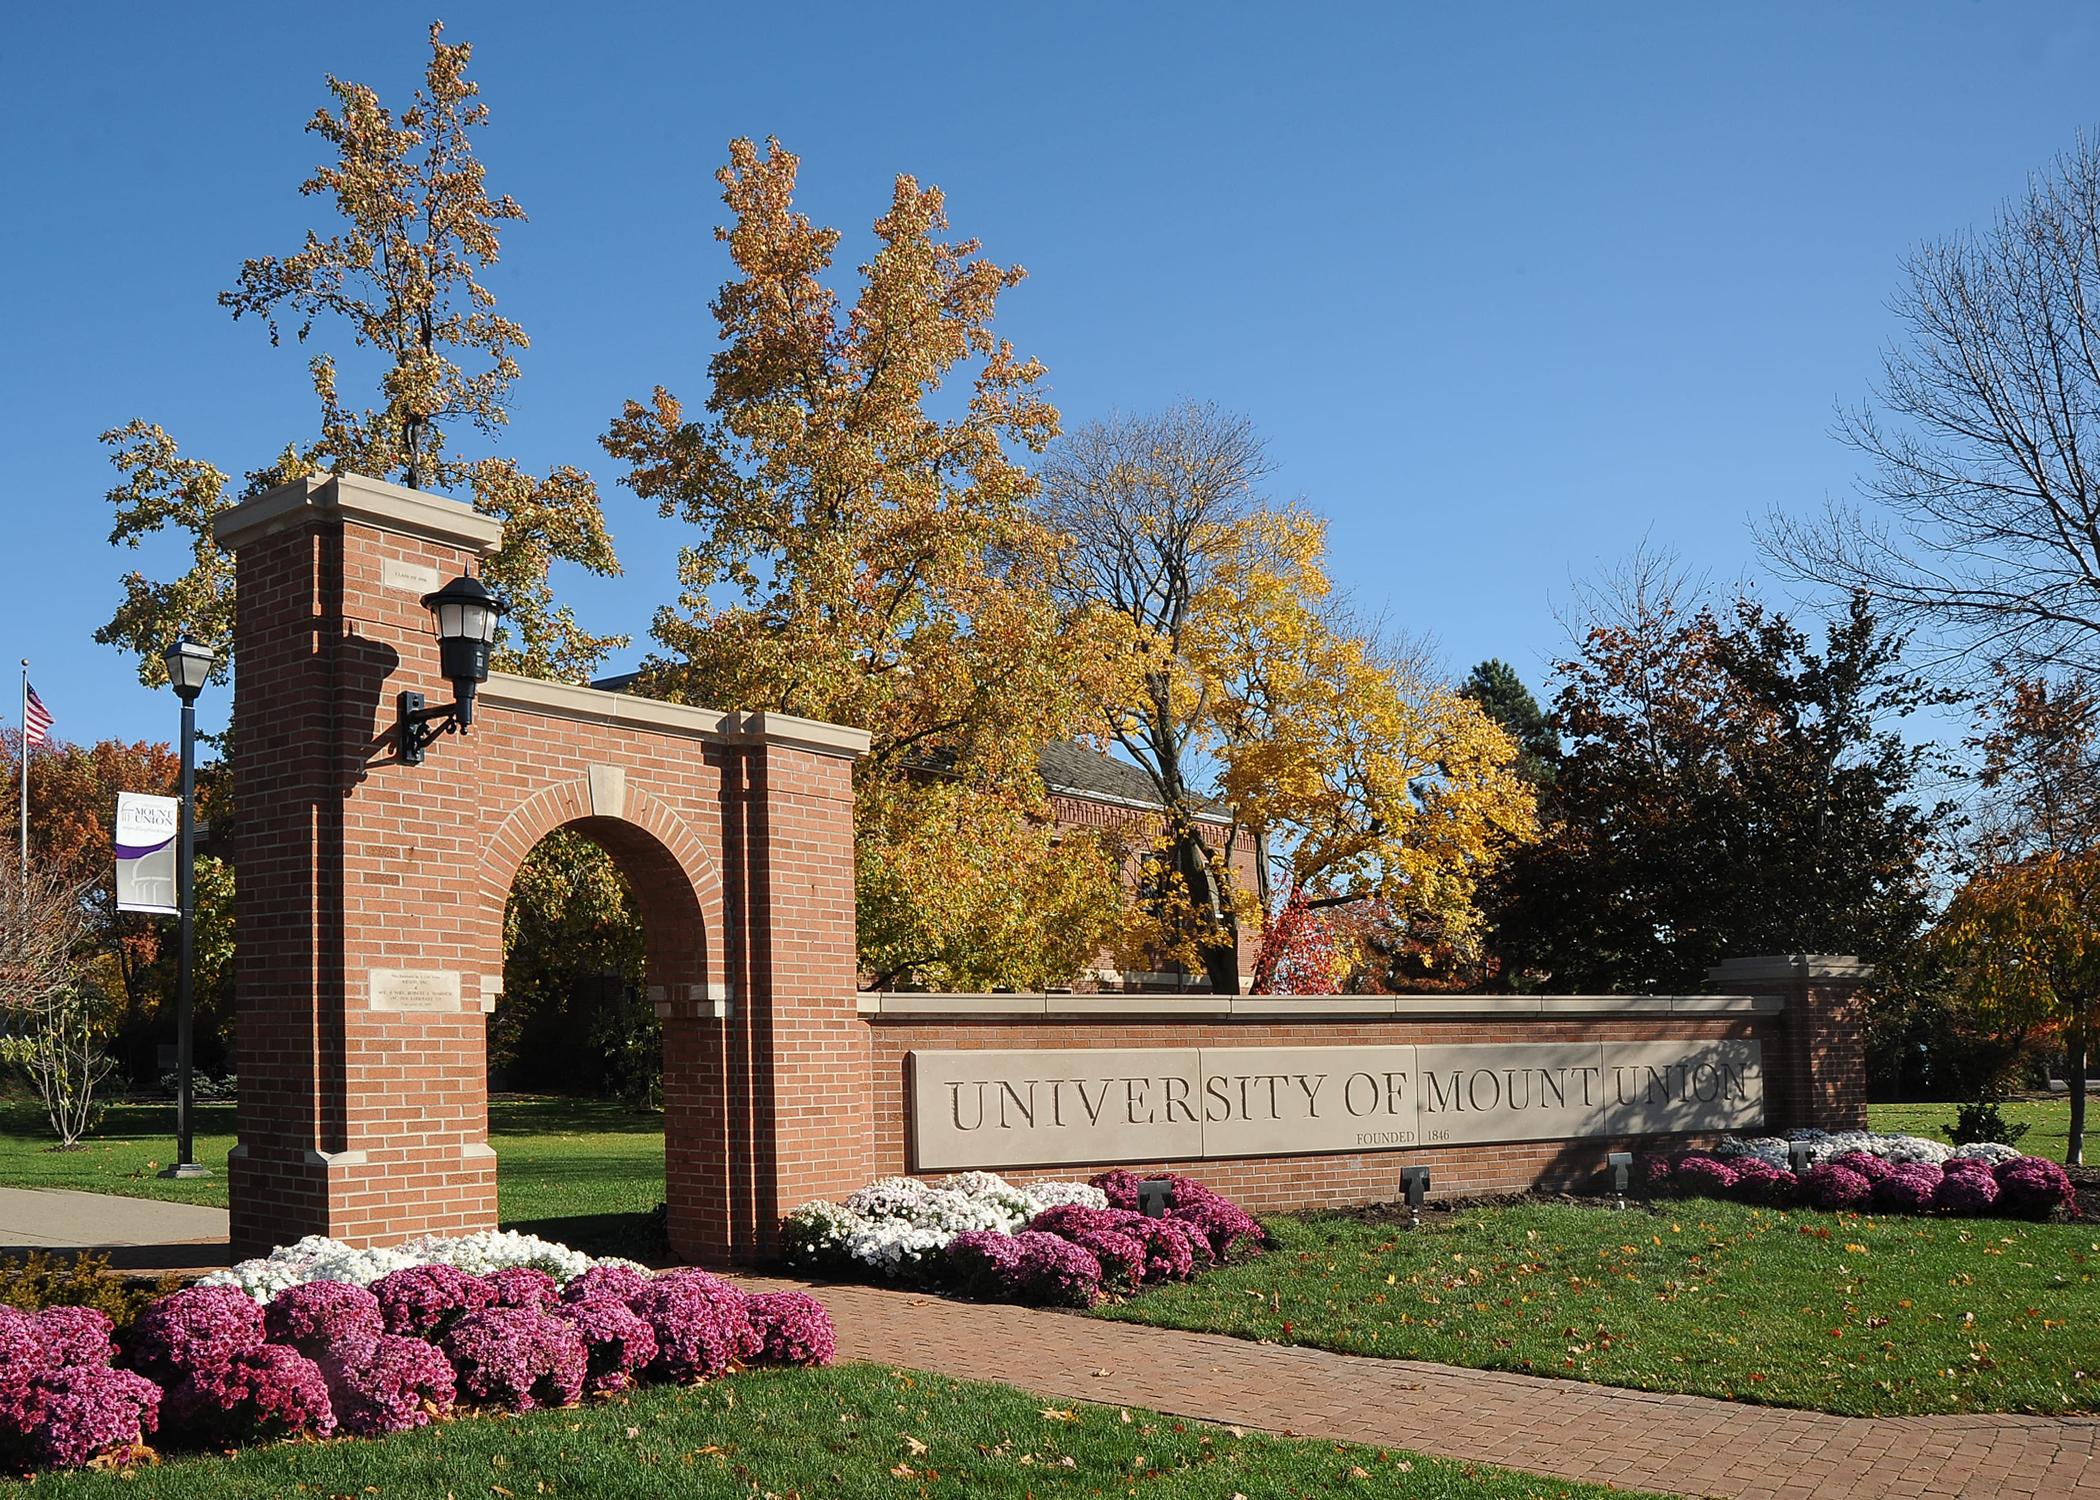 University of Mount Union sign.